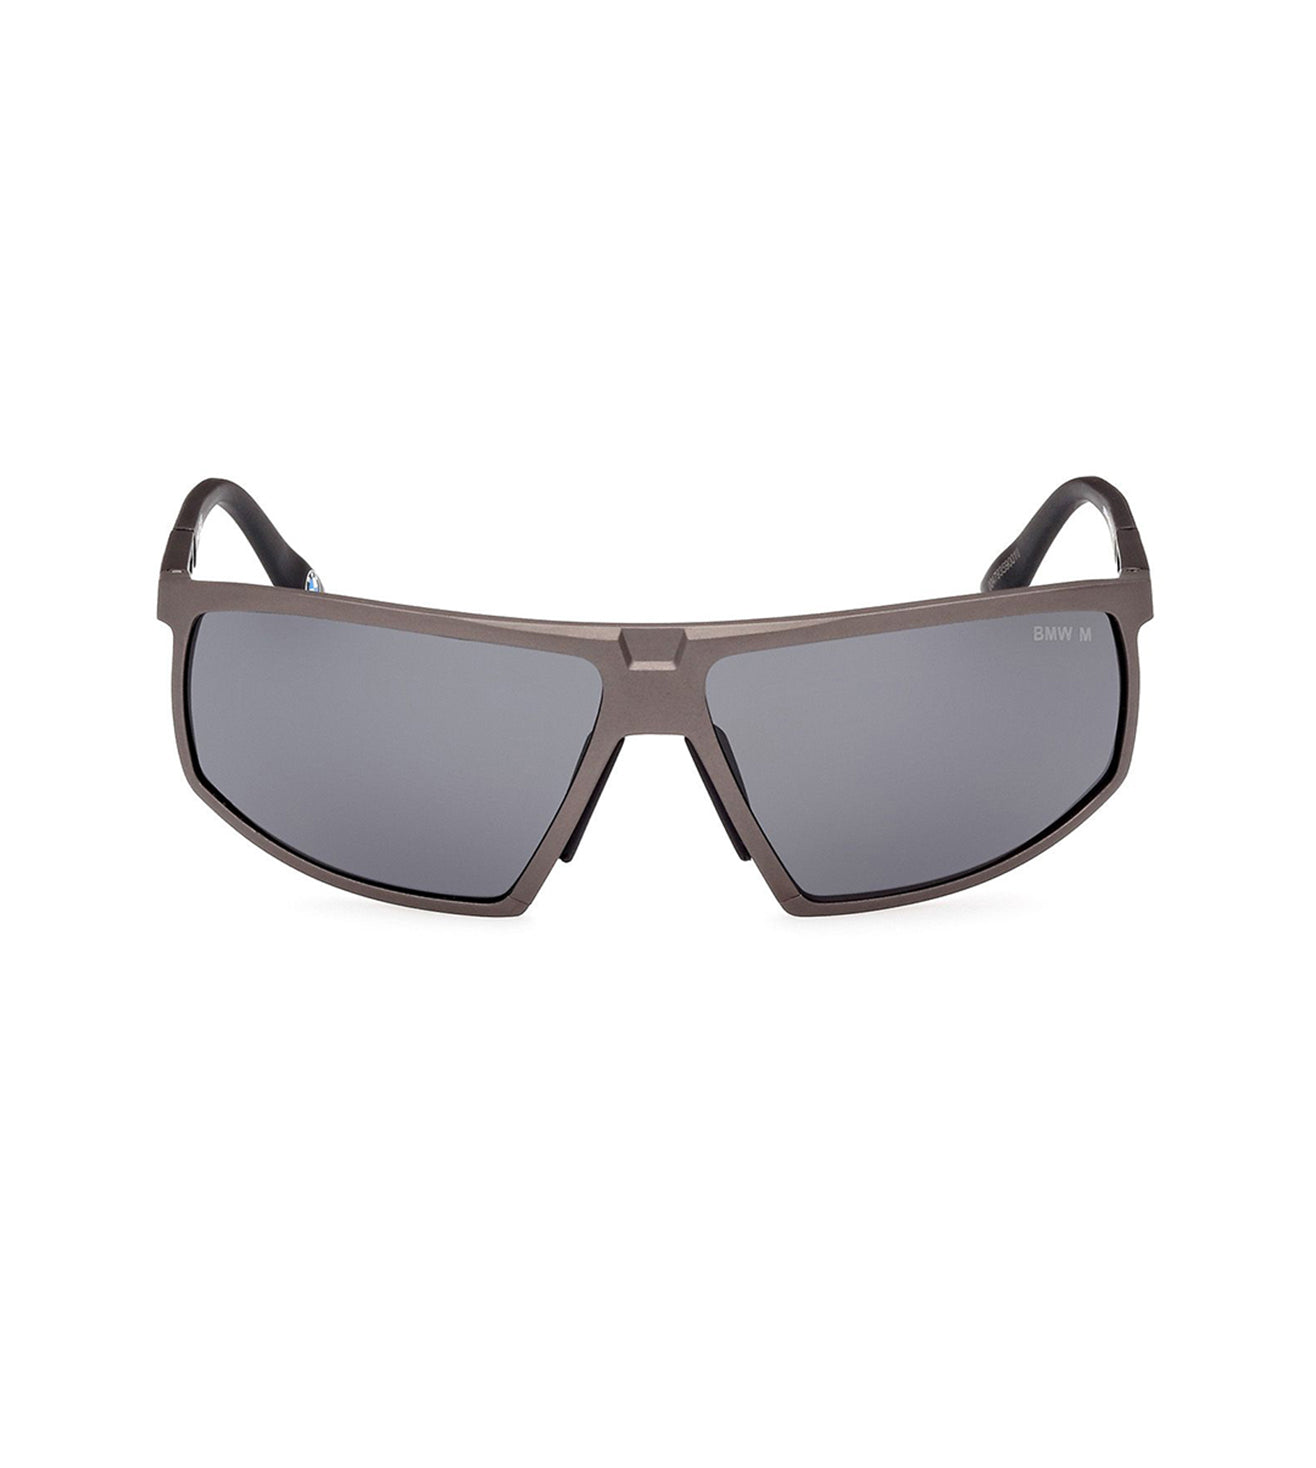 BMW Men's Smoke Rectangular Sunglasses